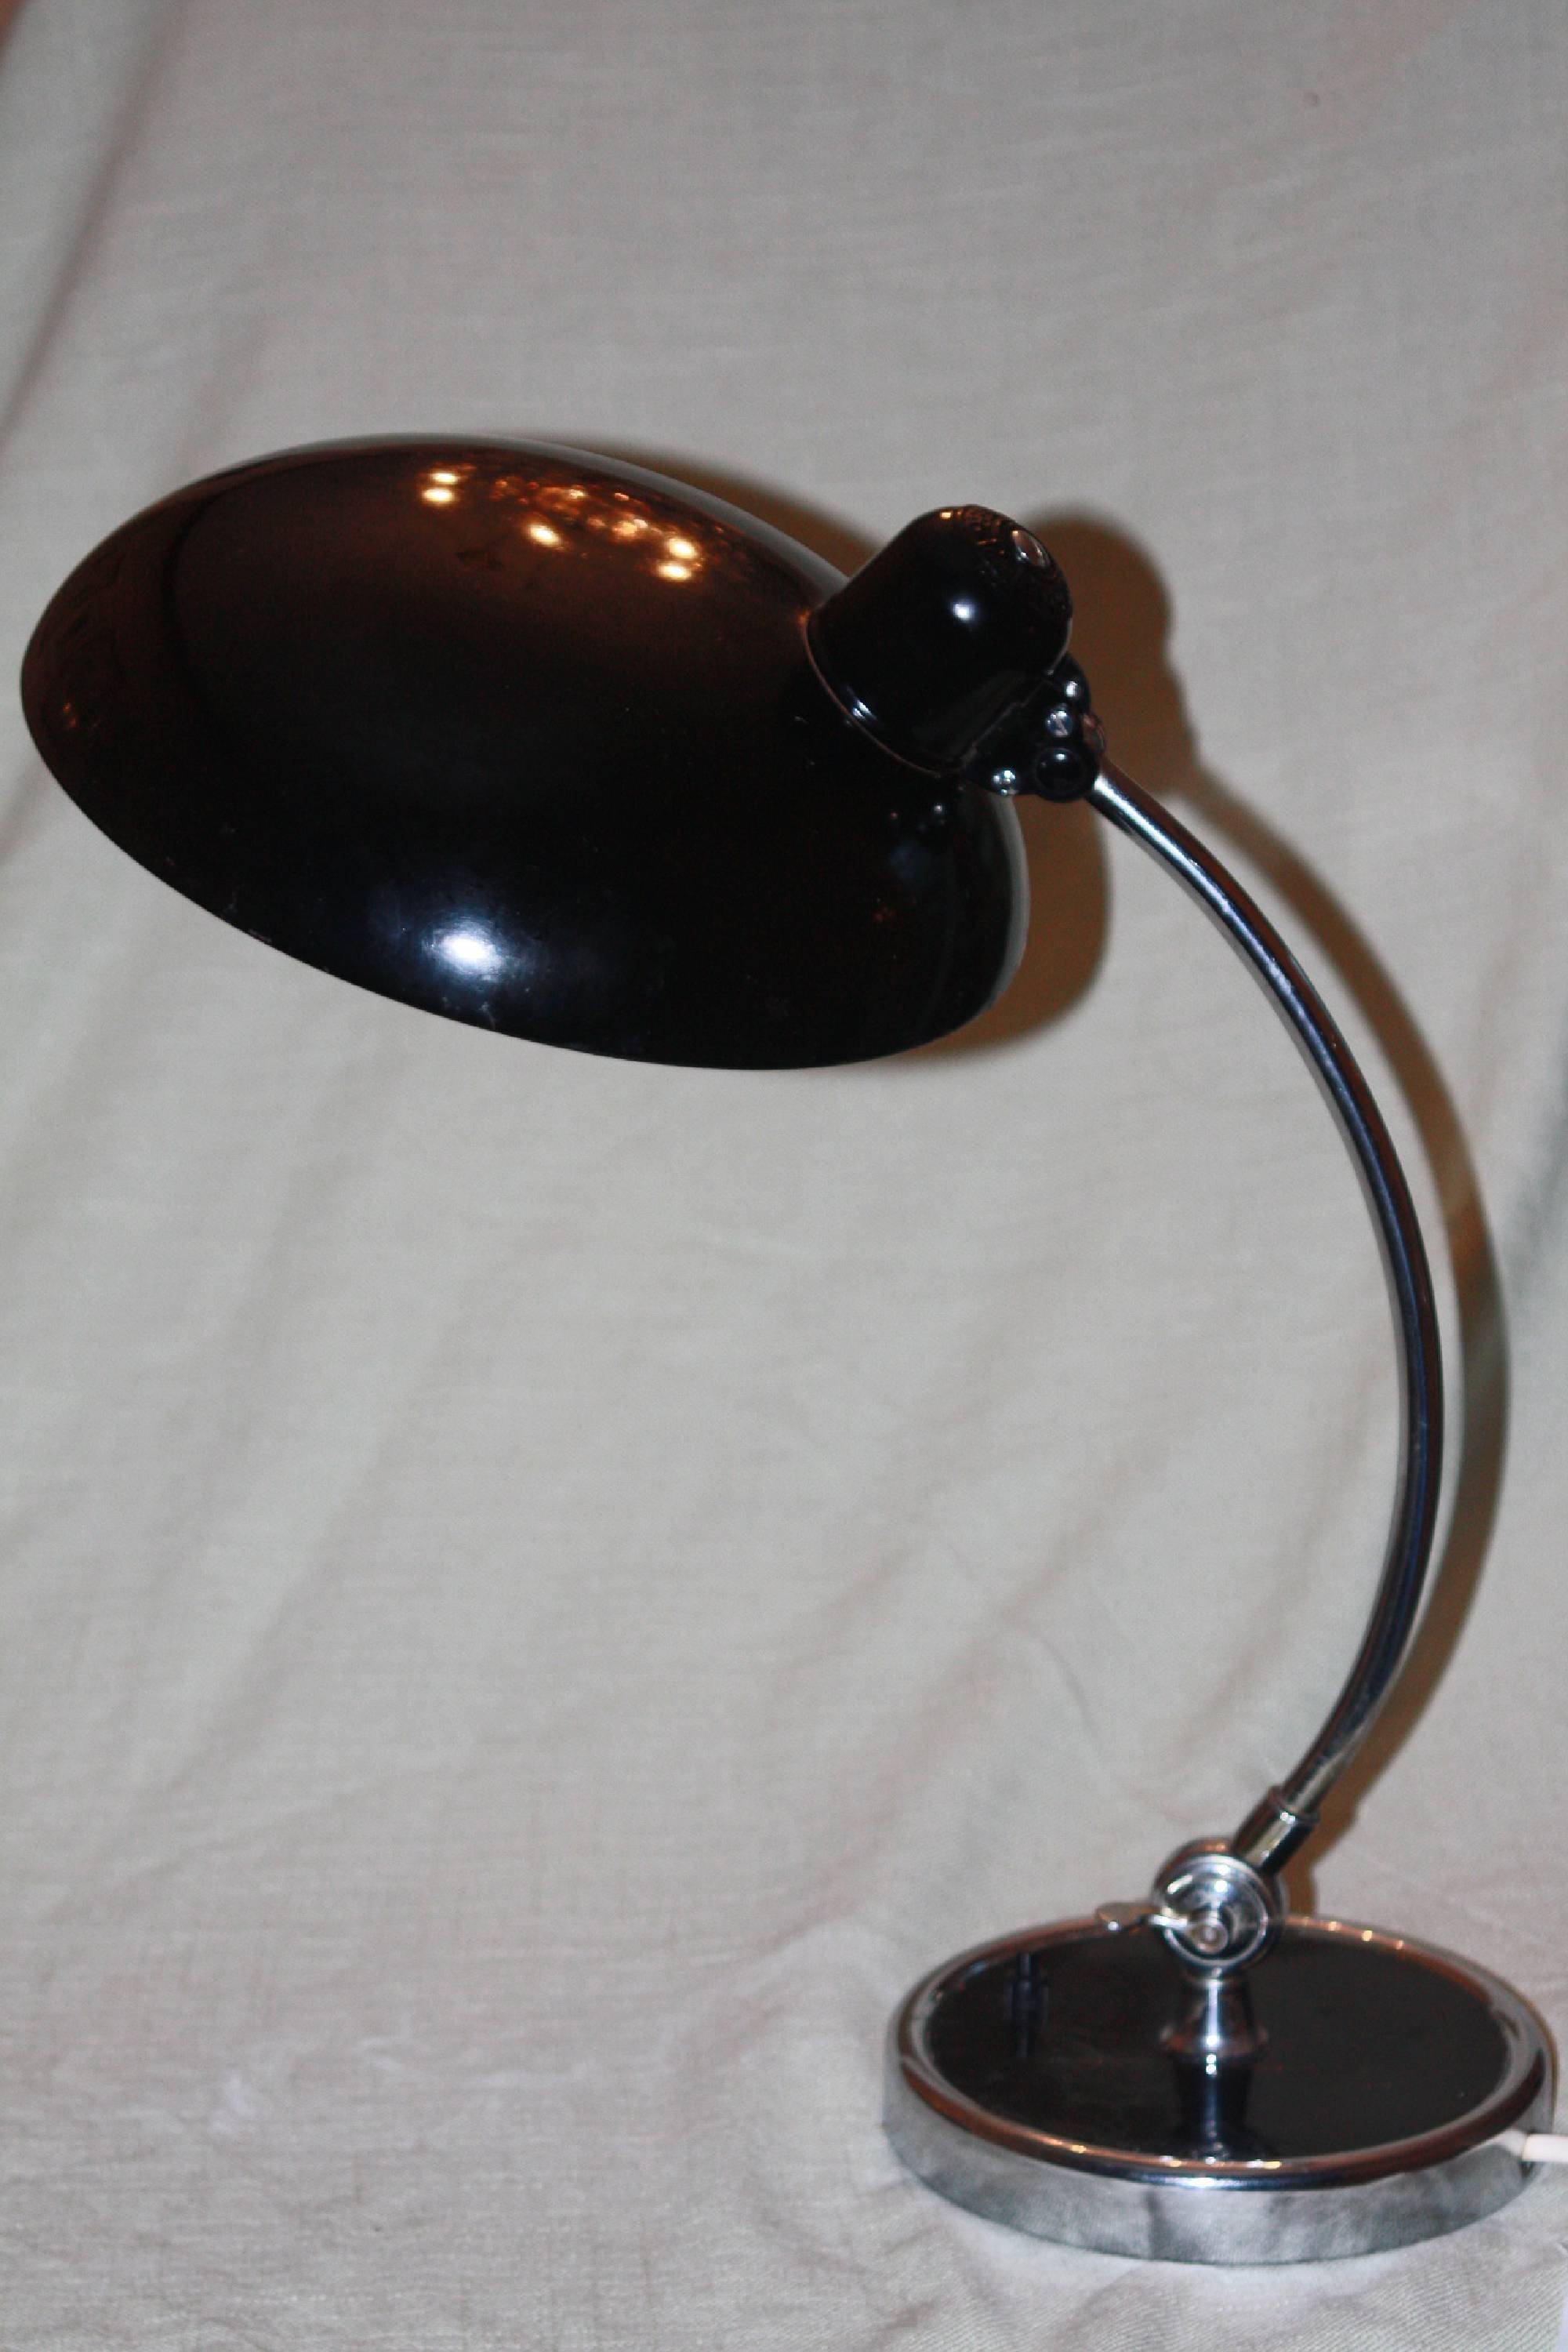 A signed German bauhaus 1950's black and chrome design desk lamp by 'Kaiser Leuchten', Model 'Idell' No. 6631